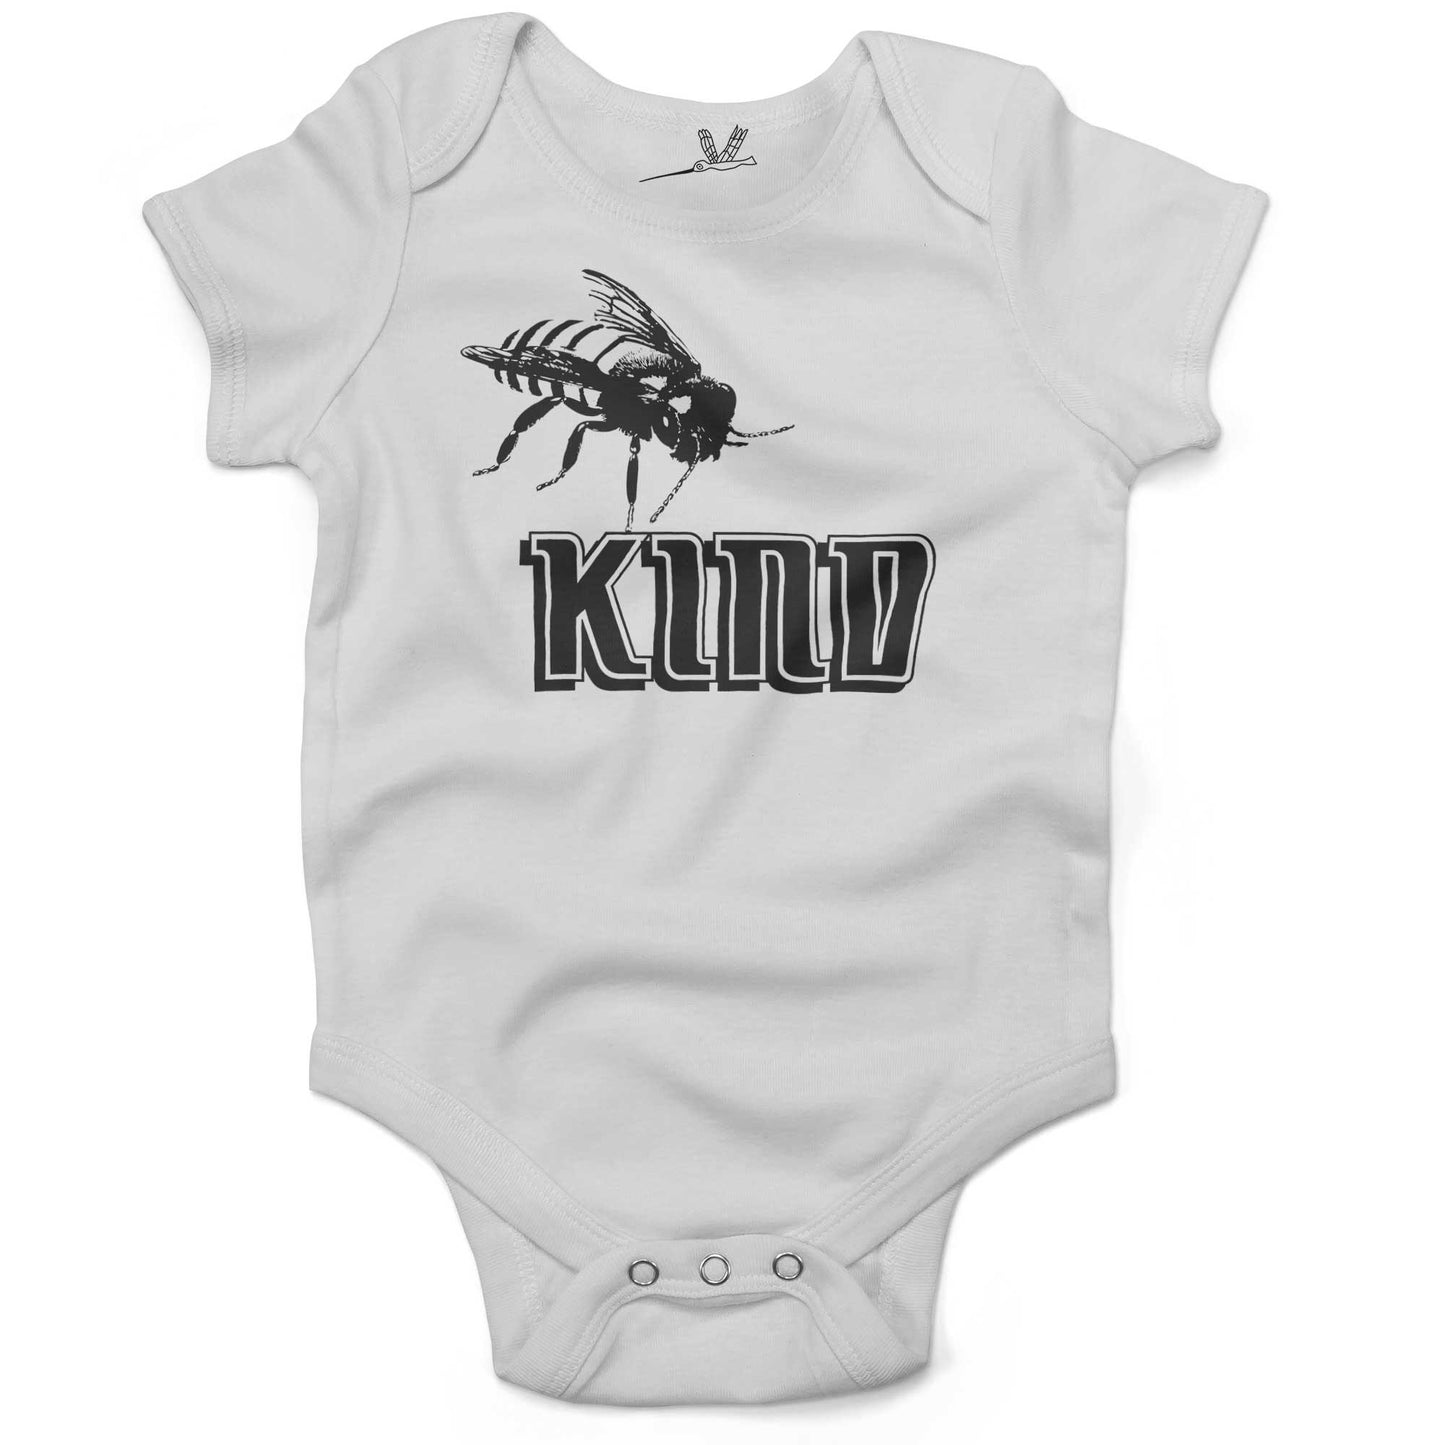 Bee Kind Infant Bodysuit or Raglan Baby Tee-White-3-6 months